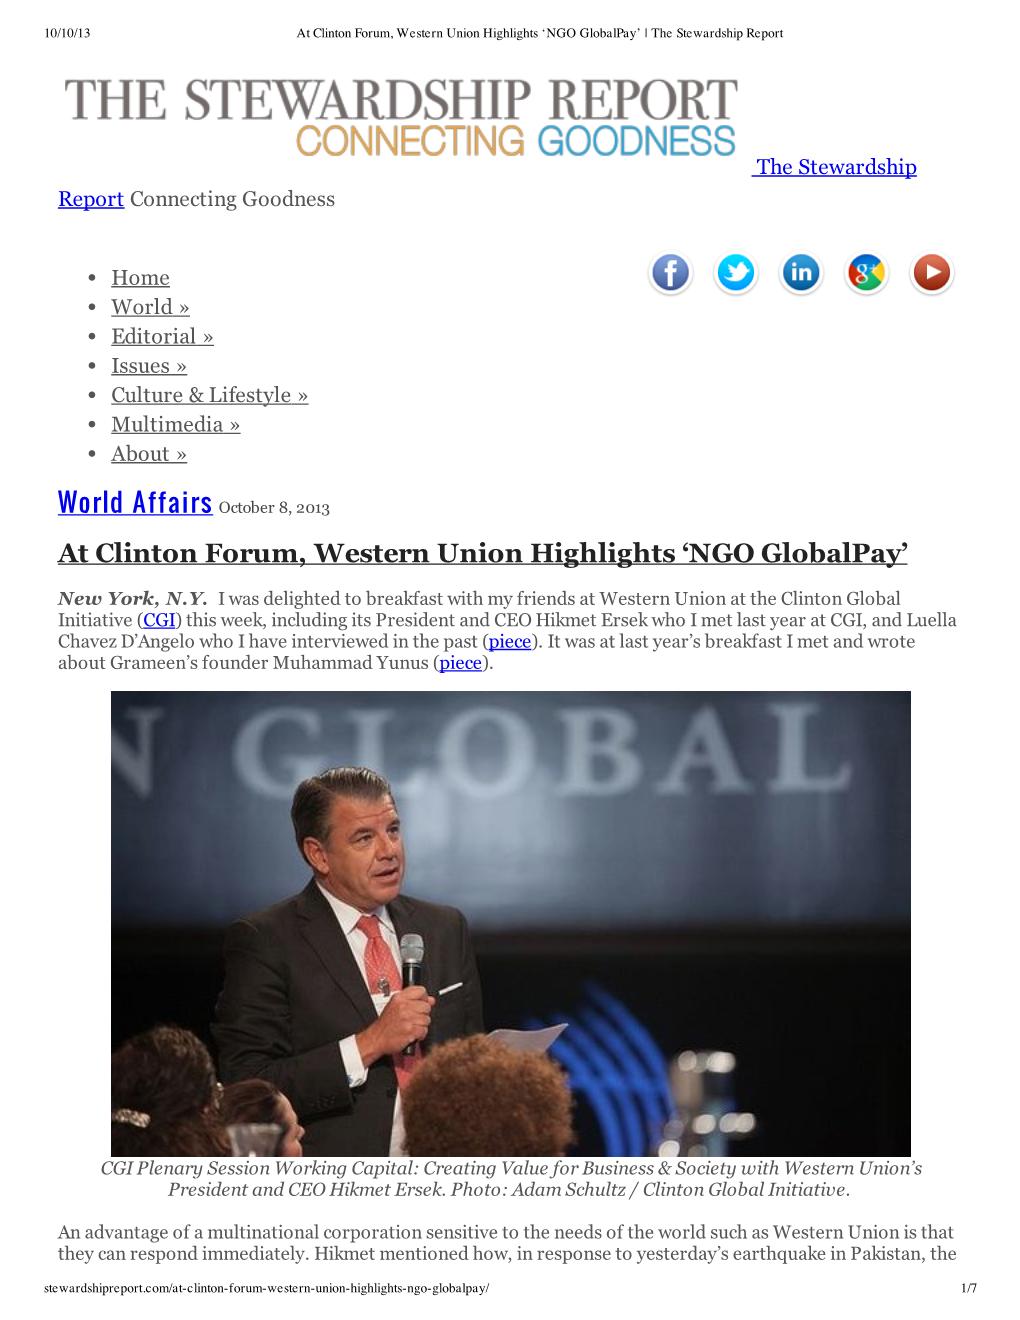 At Clinton Forum, Western Union Highlights 'NGO Globalpay'